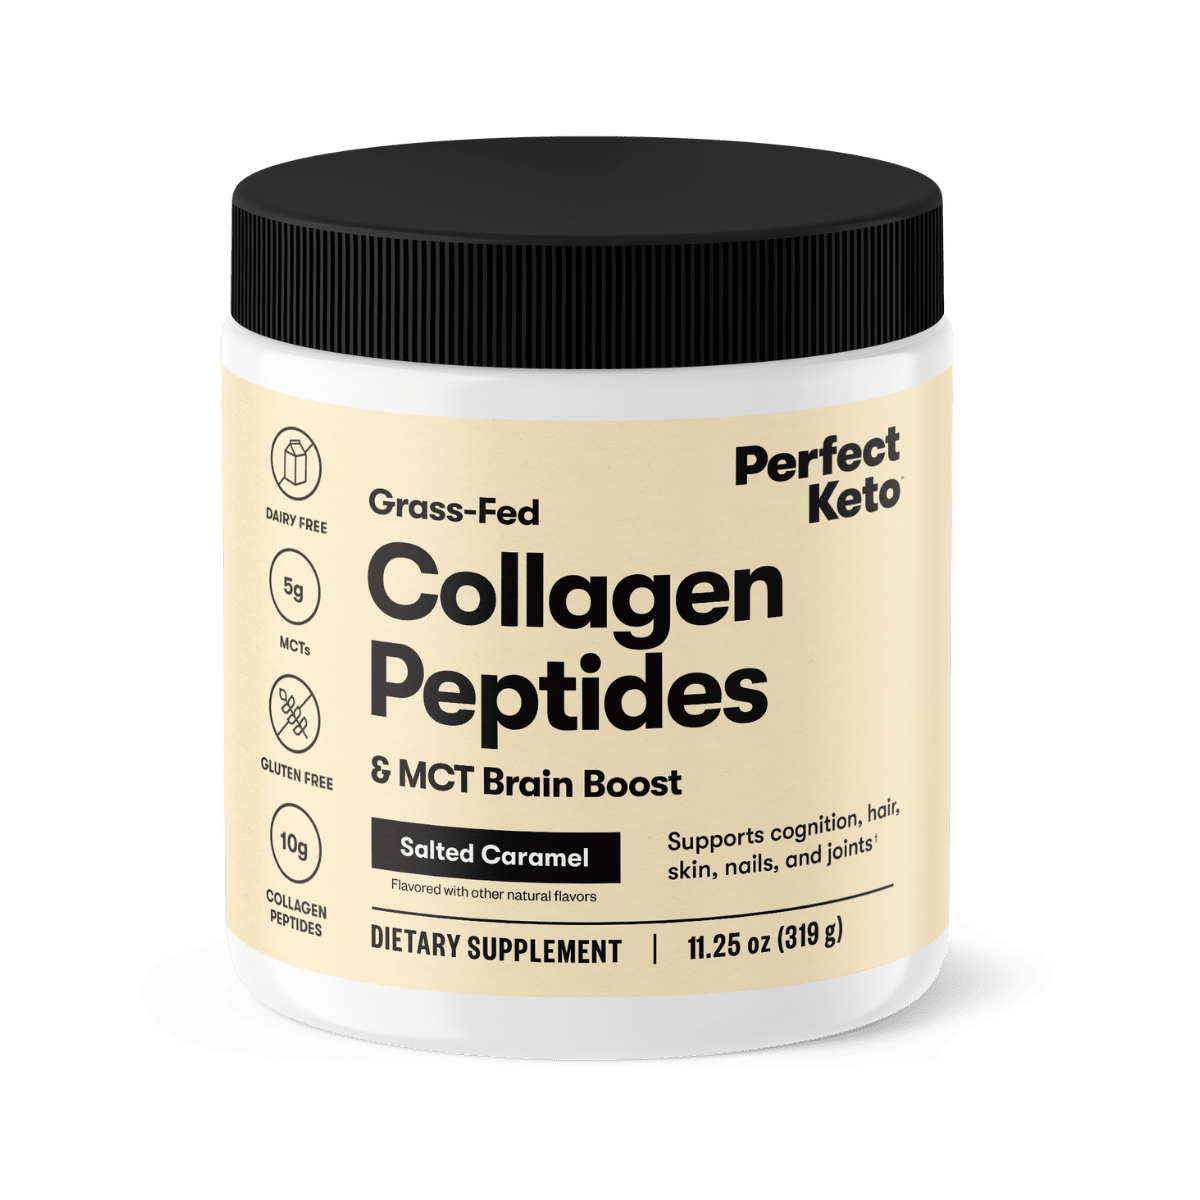 Buy wholesale Collagen powder (organic)